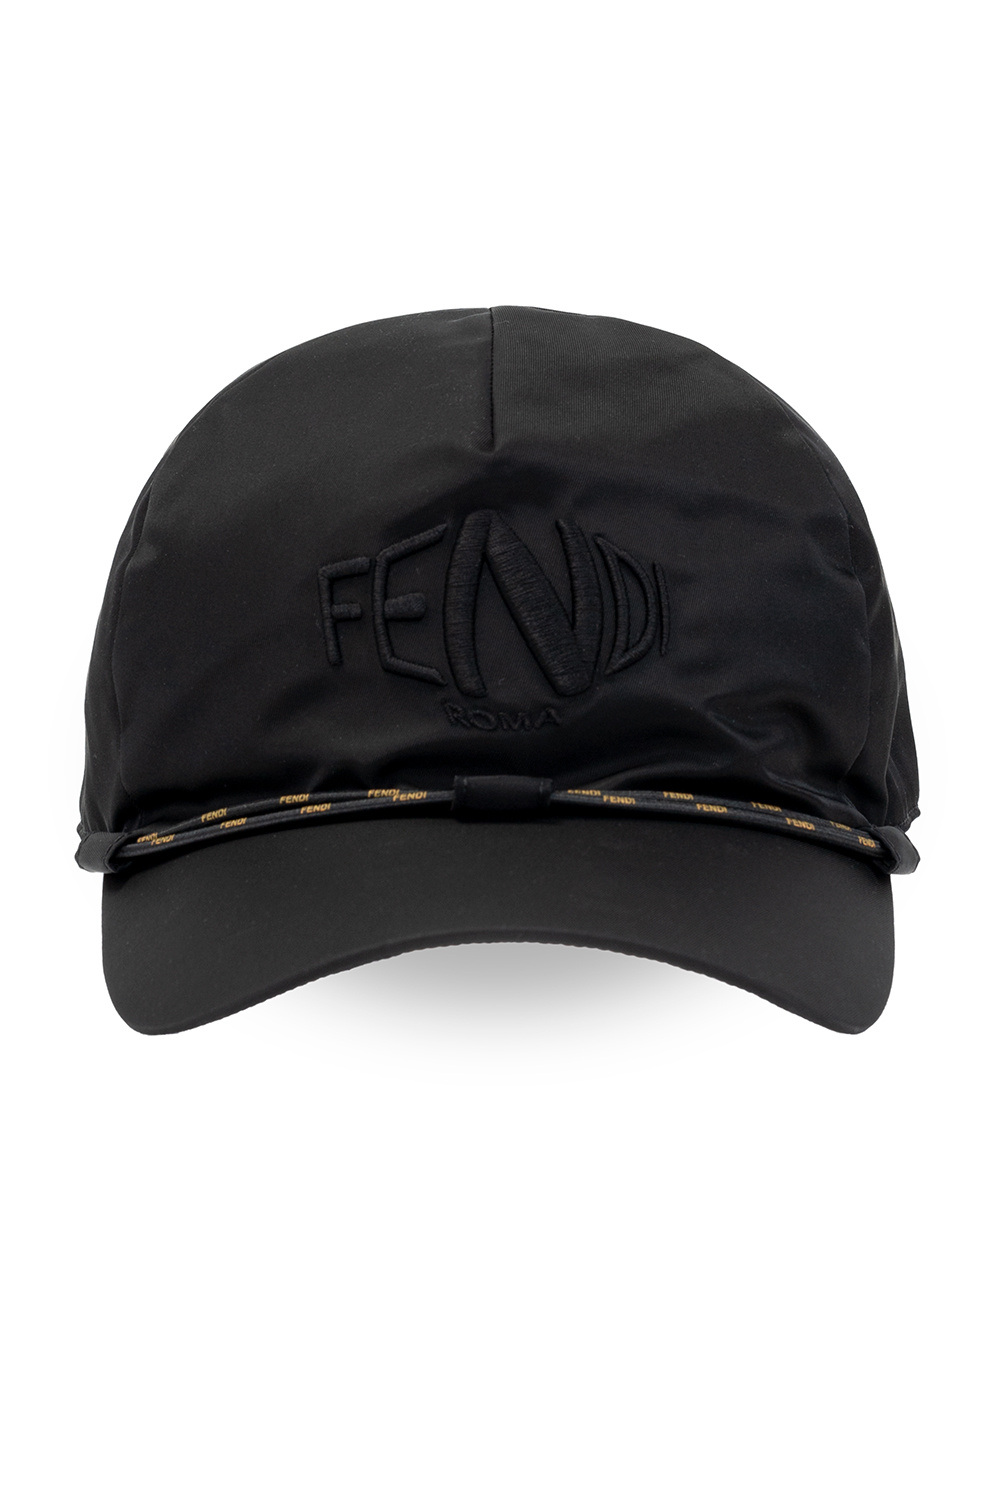 Fendi Baseball cap with logo